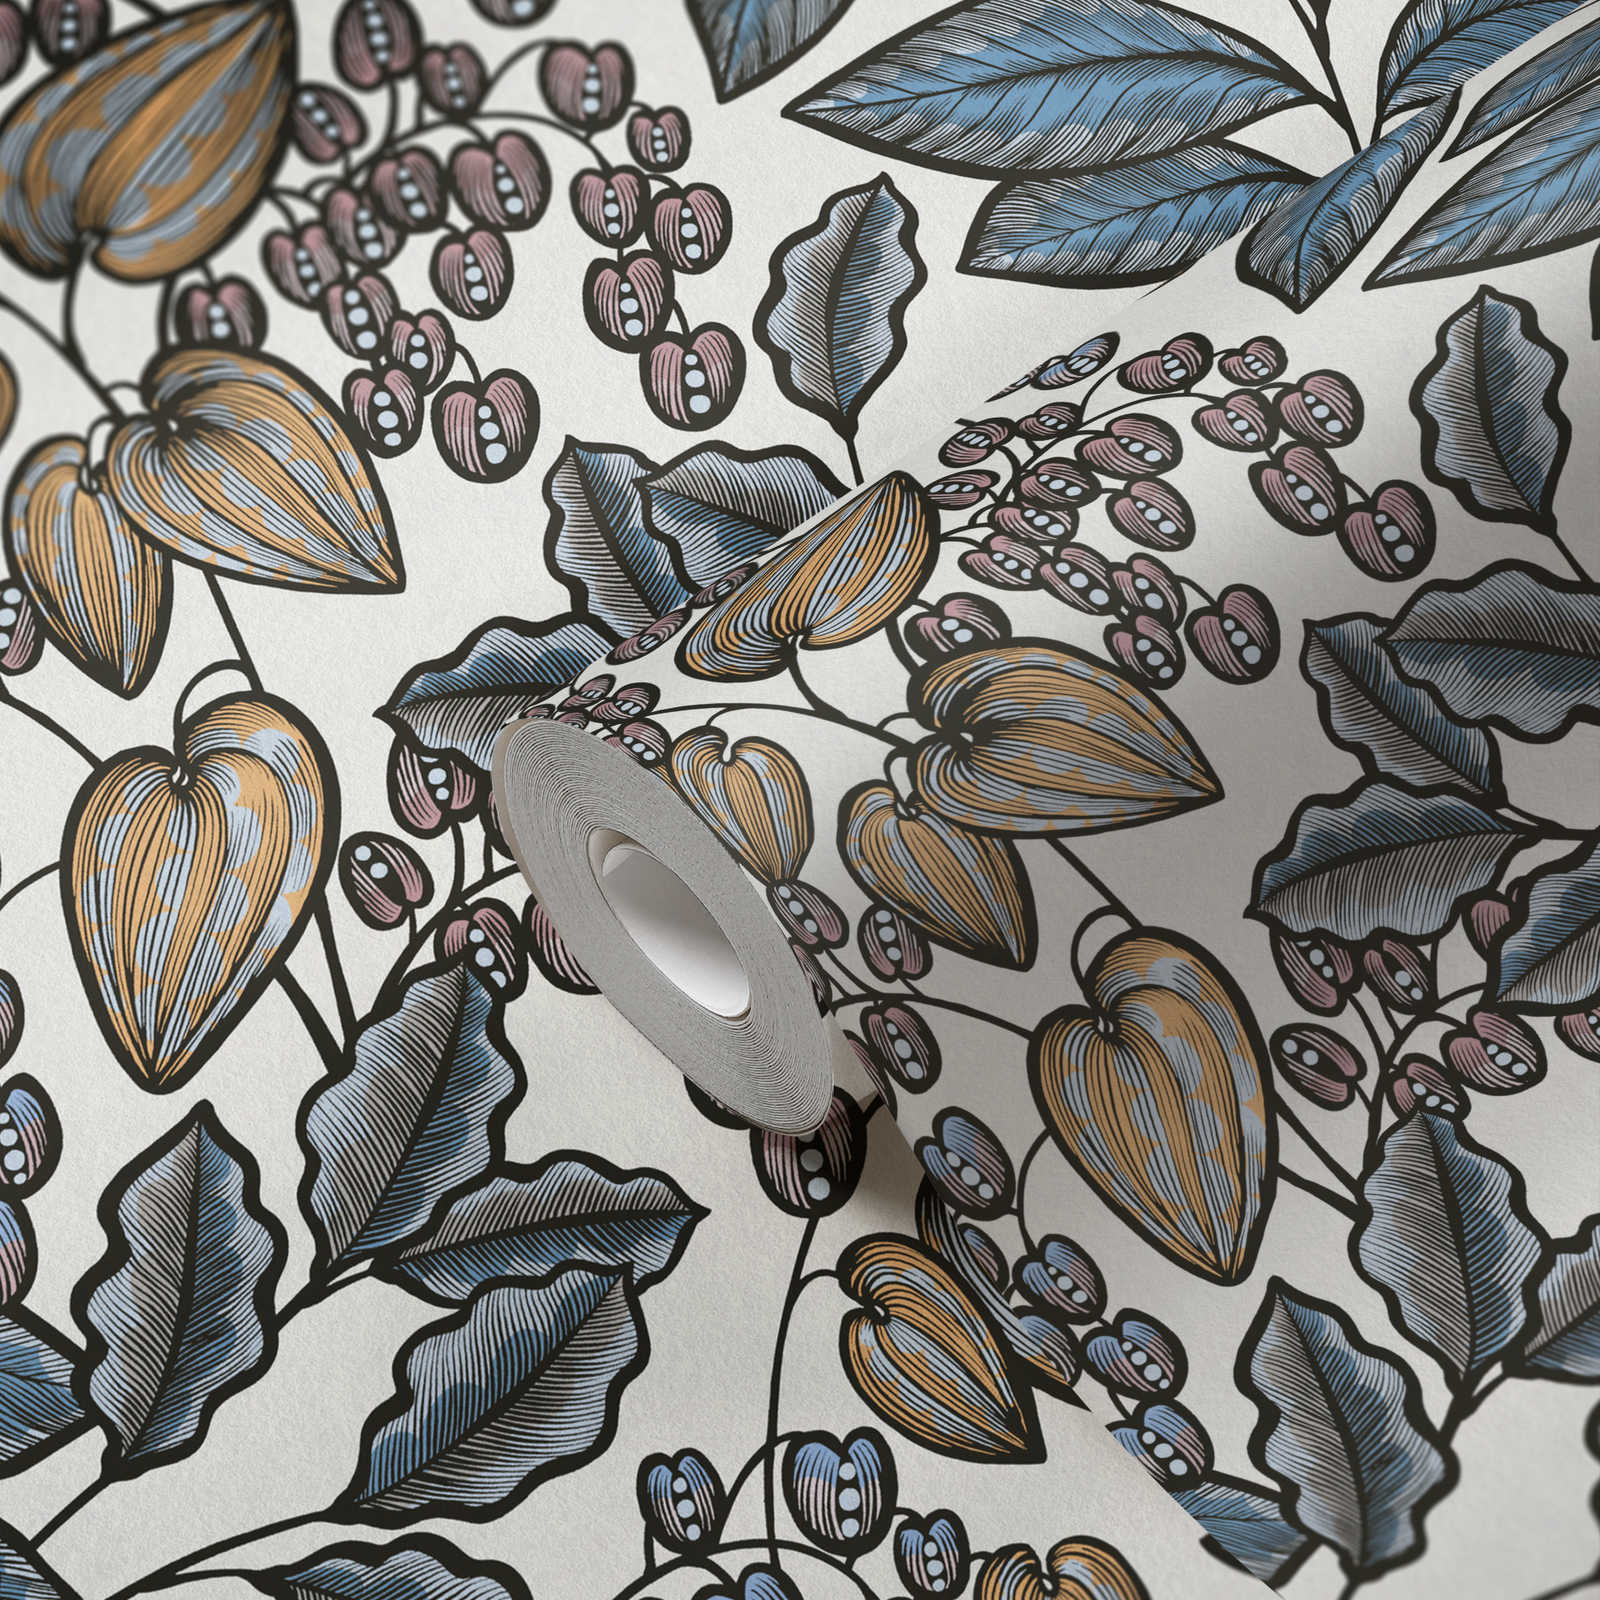             Modern wallpaper leaves pattern in retro look - blue, white, yellow
        